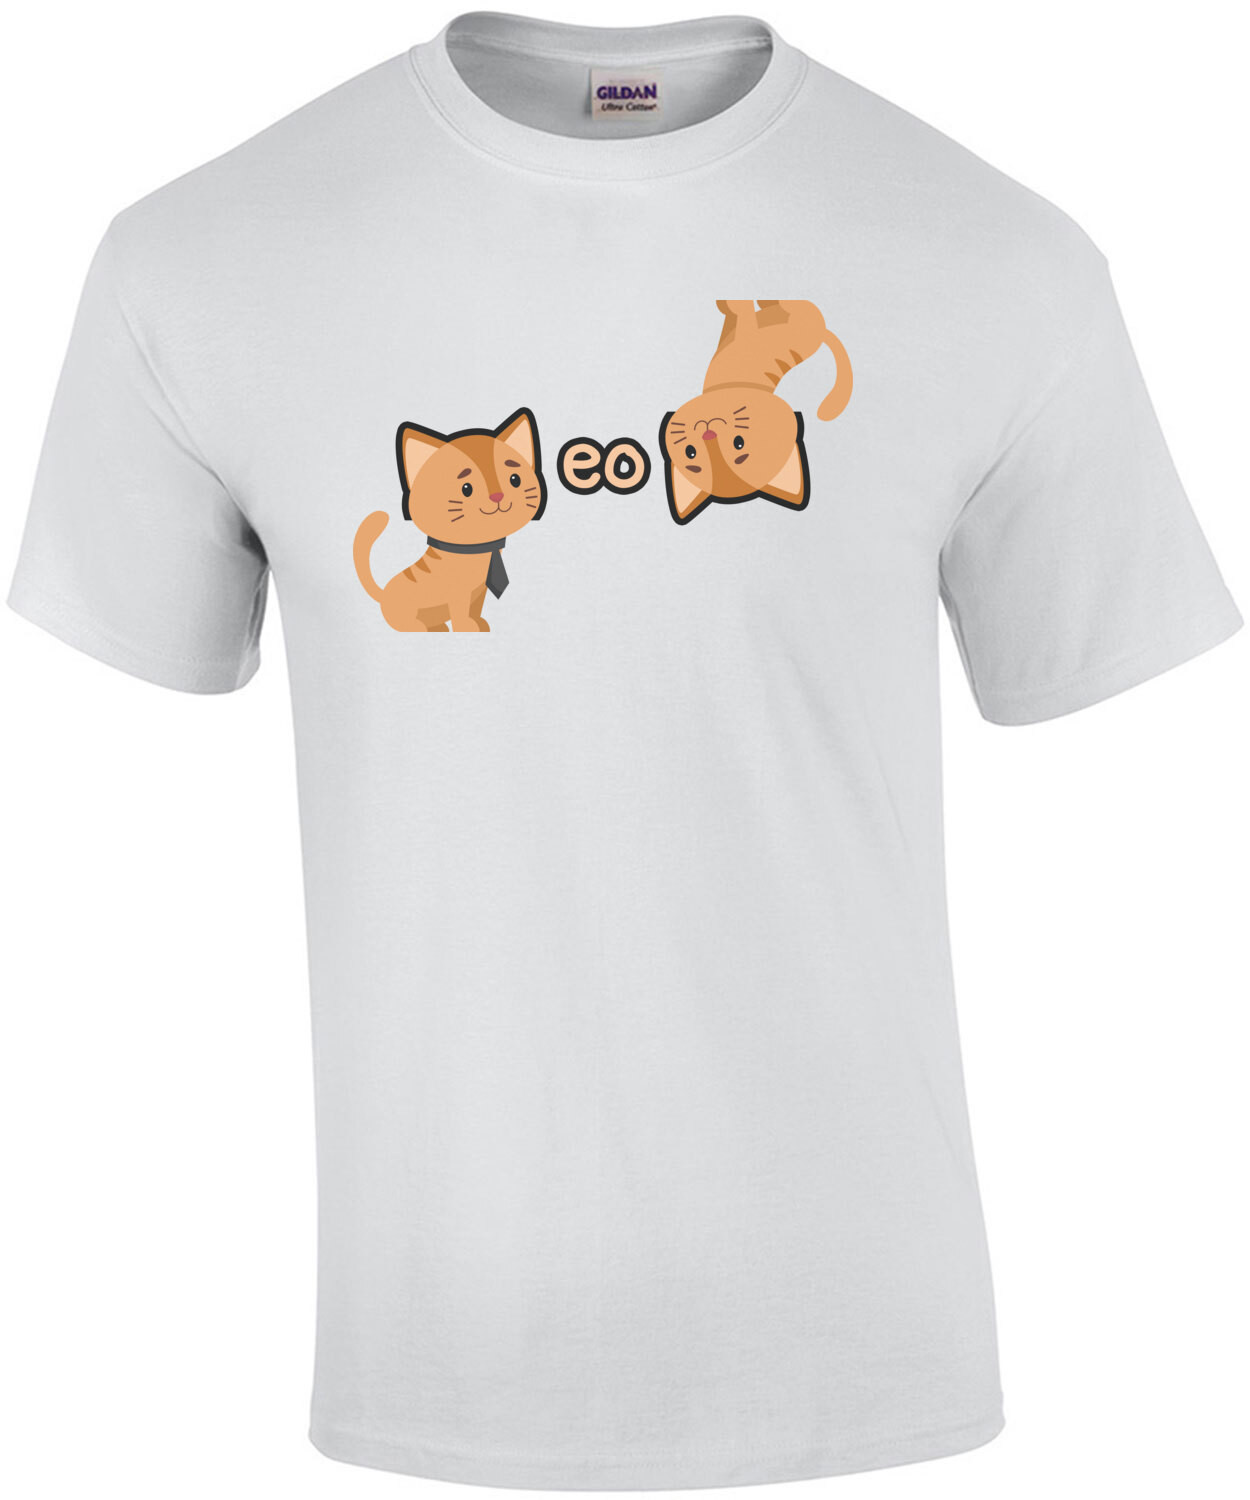 MEOW - cute cat t-shirt